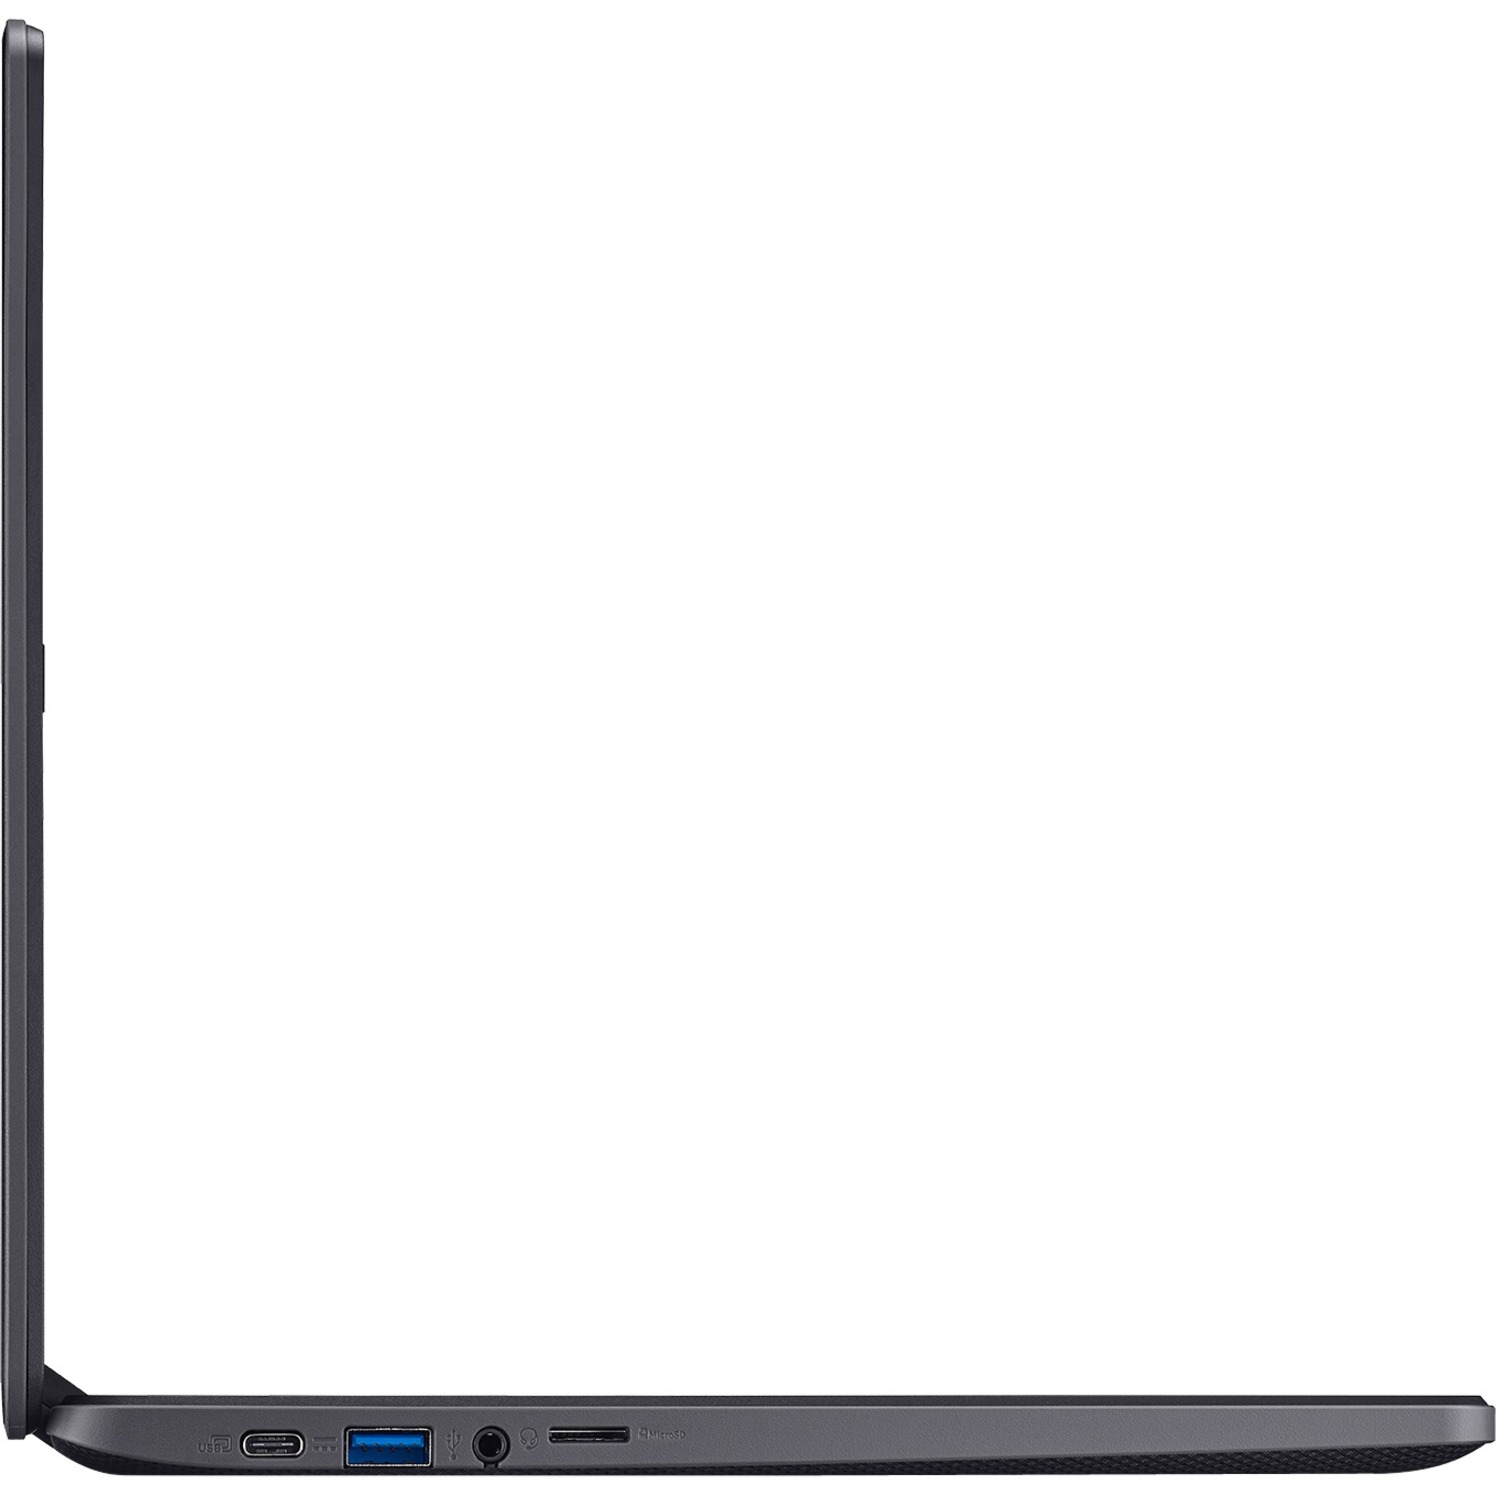 Acer Chromebook 712 C871, 12\", Intel Celeron 5205U, Intel UHD Graphics, 4GB RAM, 32GB Flash, Shale Black, ChromeOS, C871-C85K - image 4 of 13